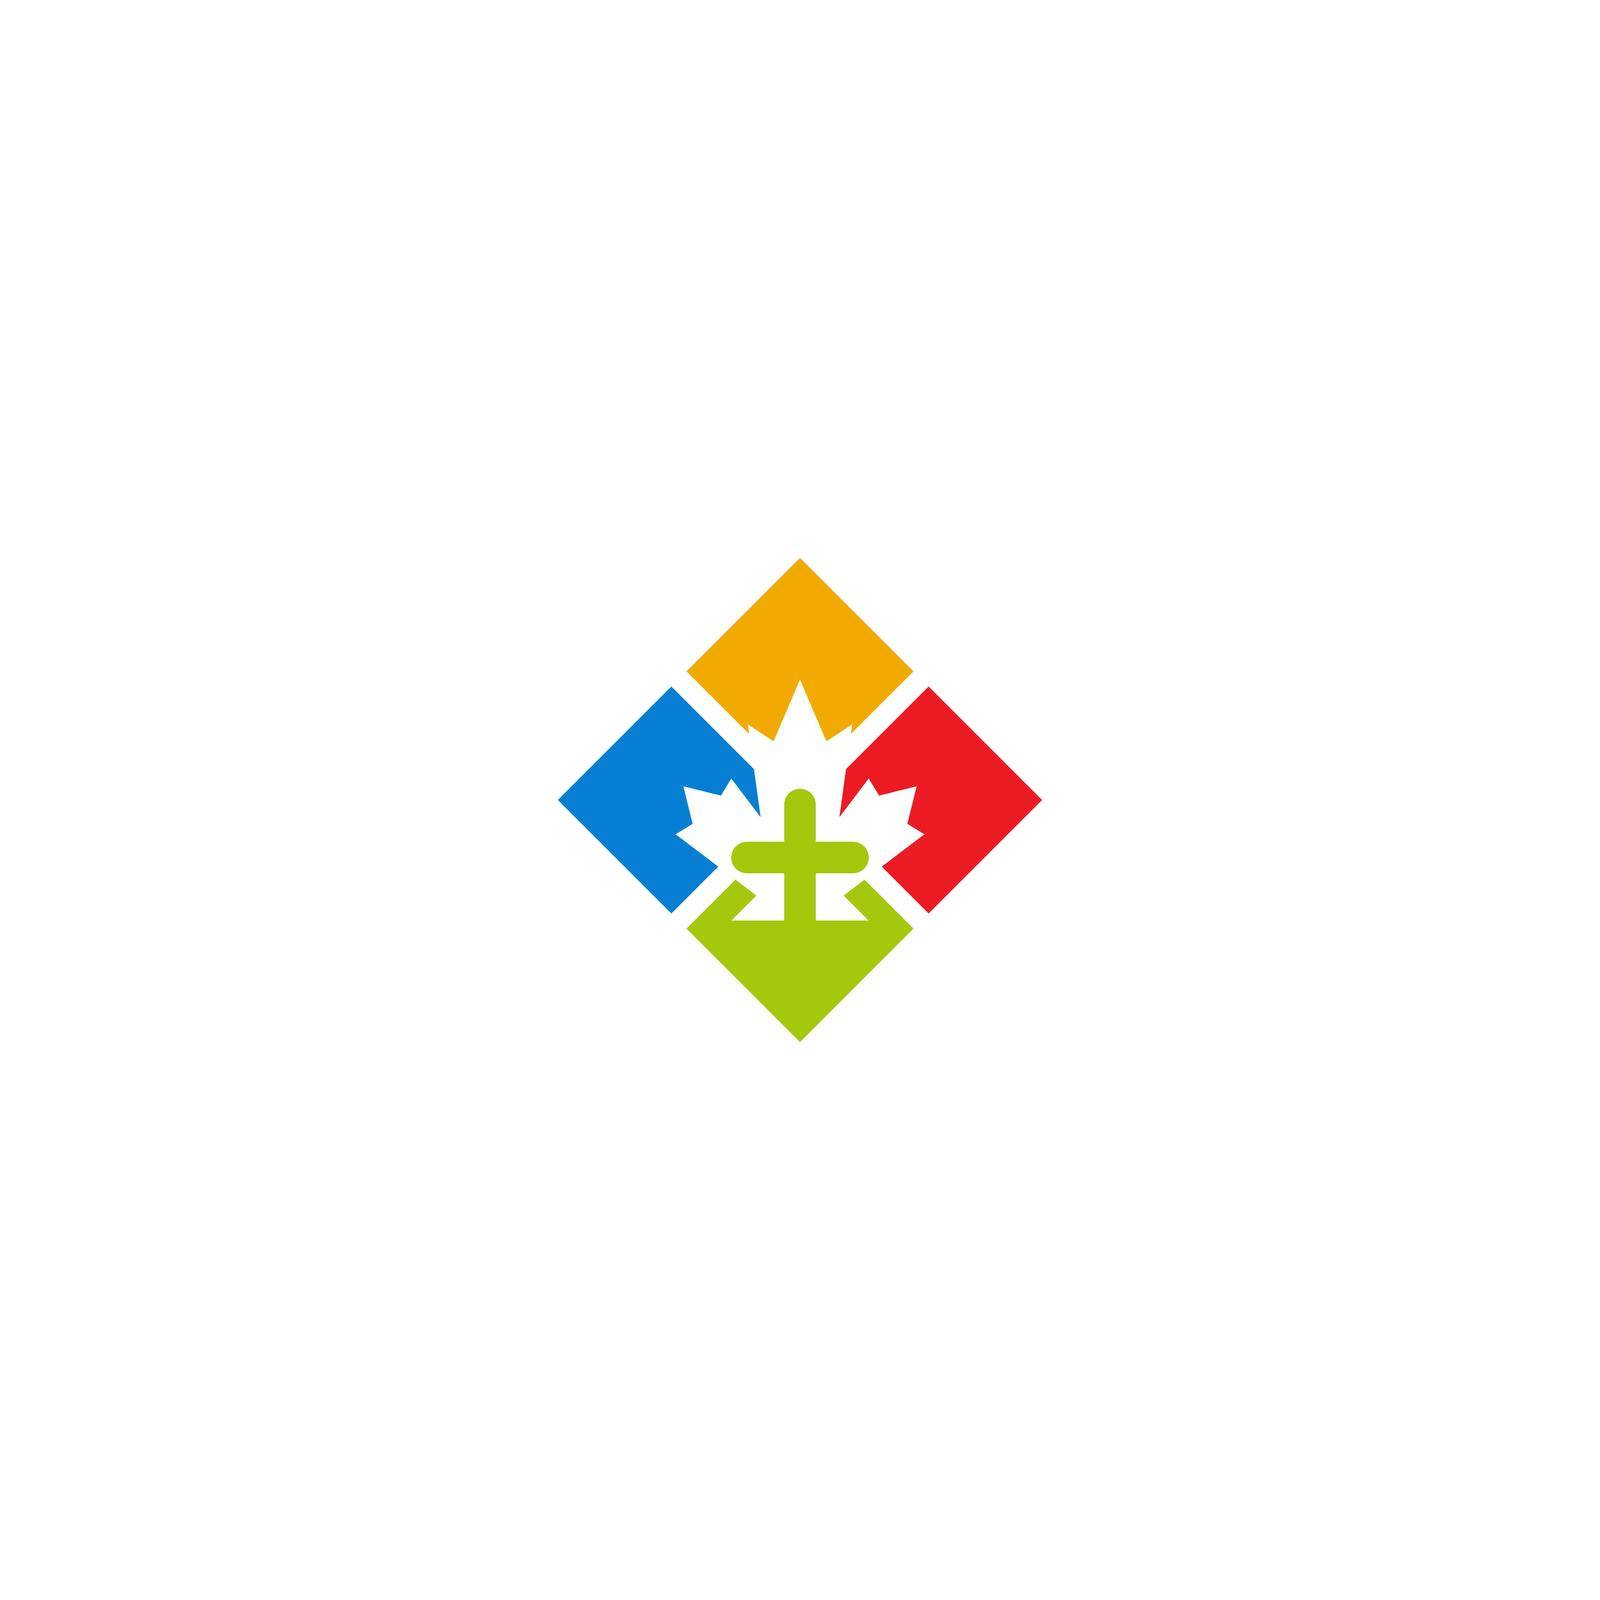 Maple leaf medical pharmacy logo icon by bellaxbudhong3